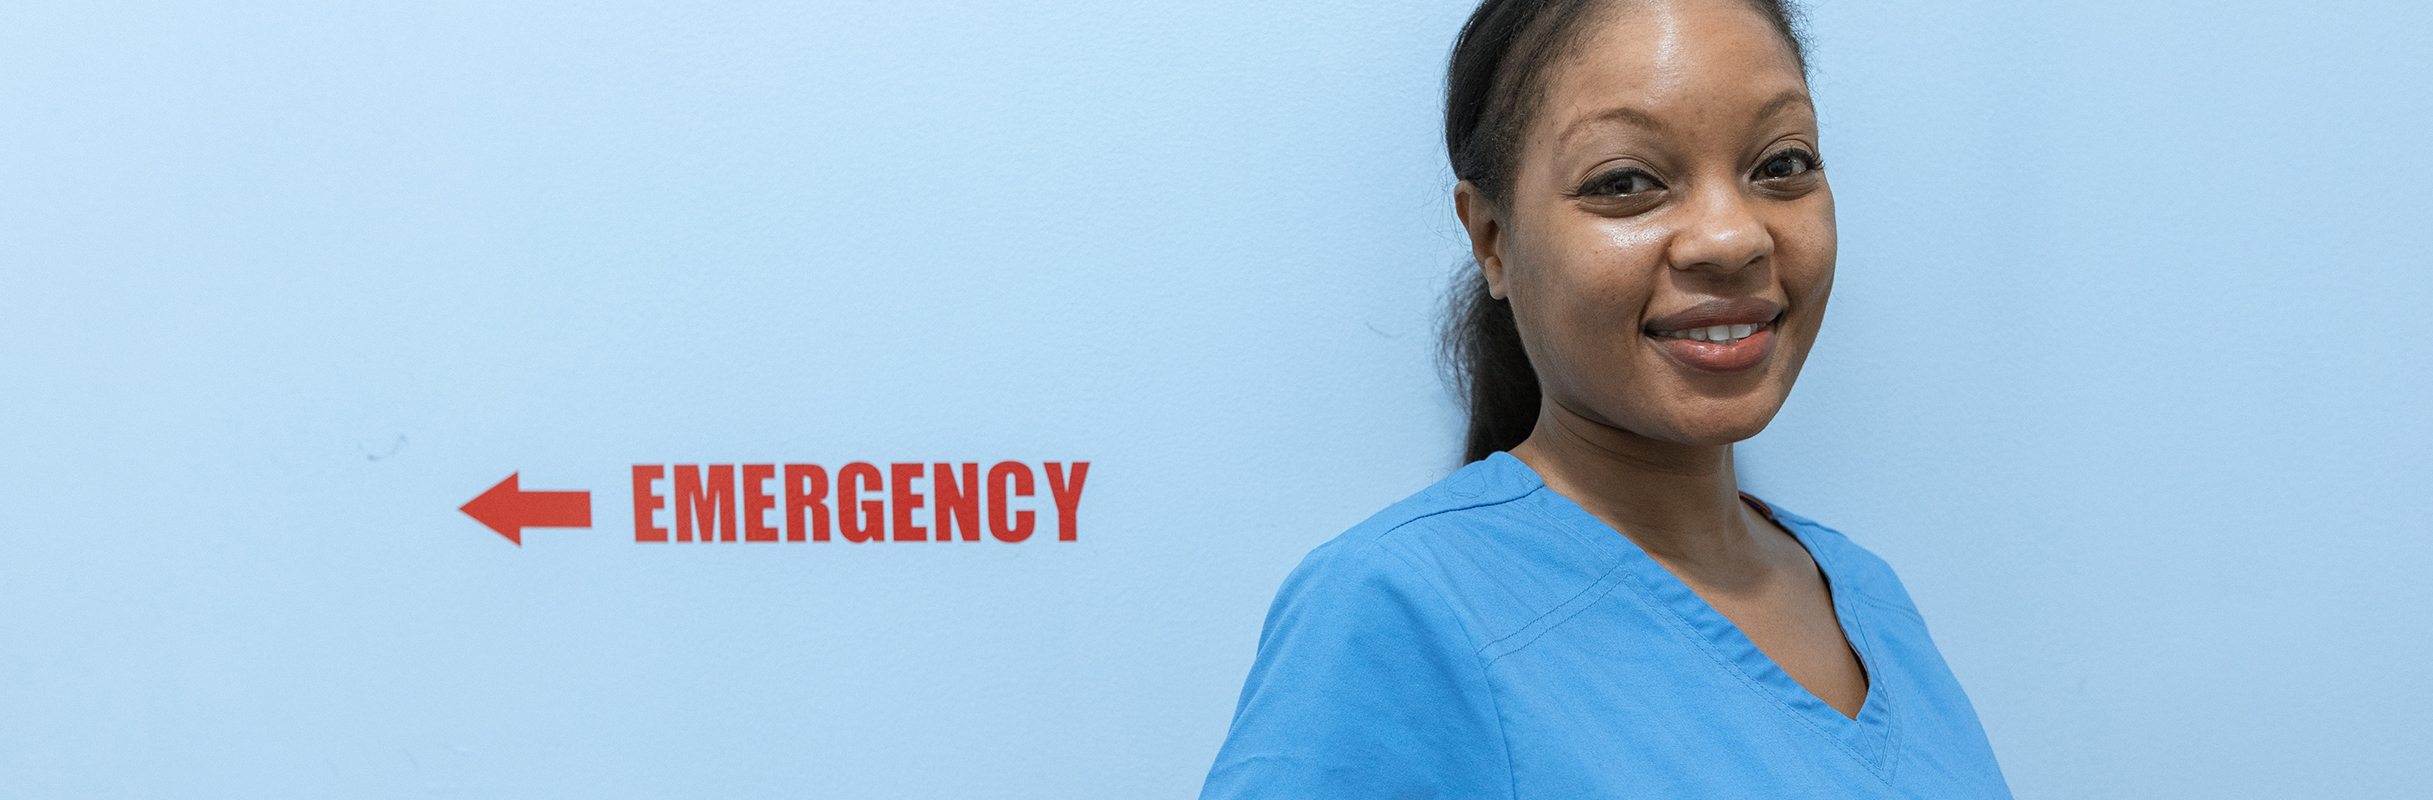 Emergency Nurse beside sign